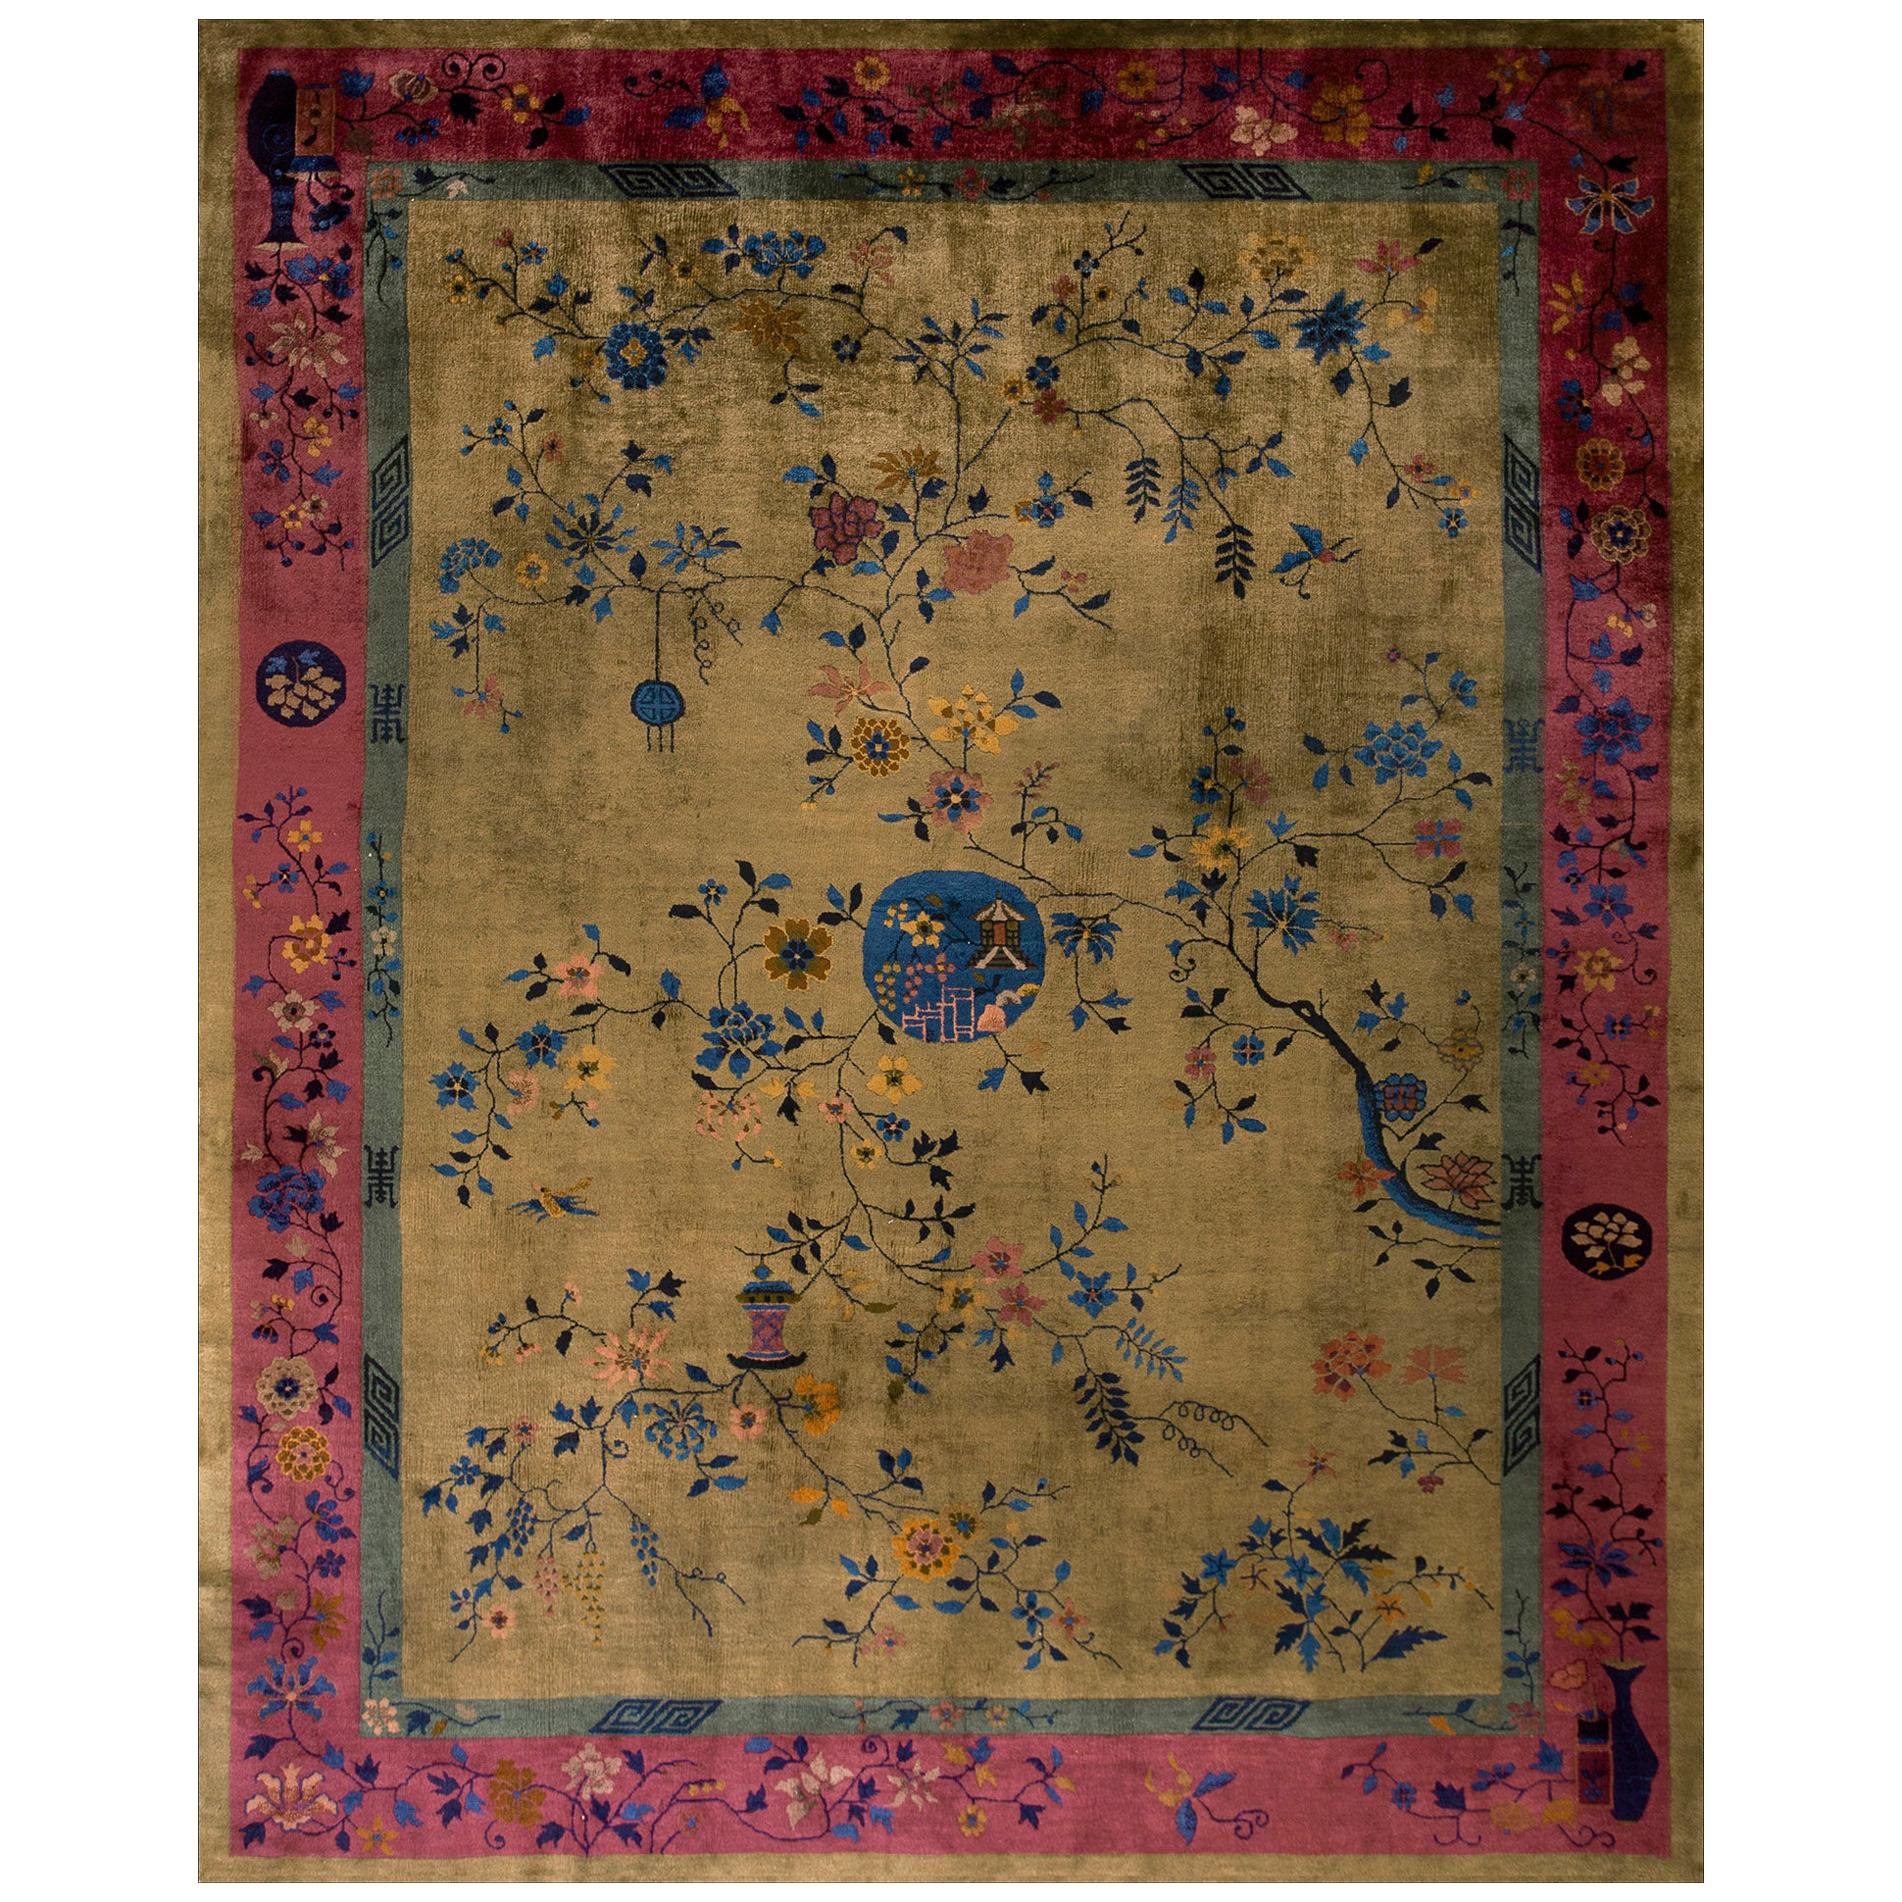 1920s Chinese Art Deco Carpet ( 9' x 11'4" - 275 x 345 )